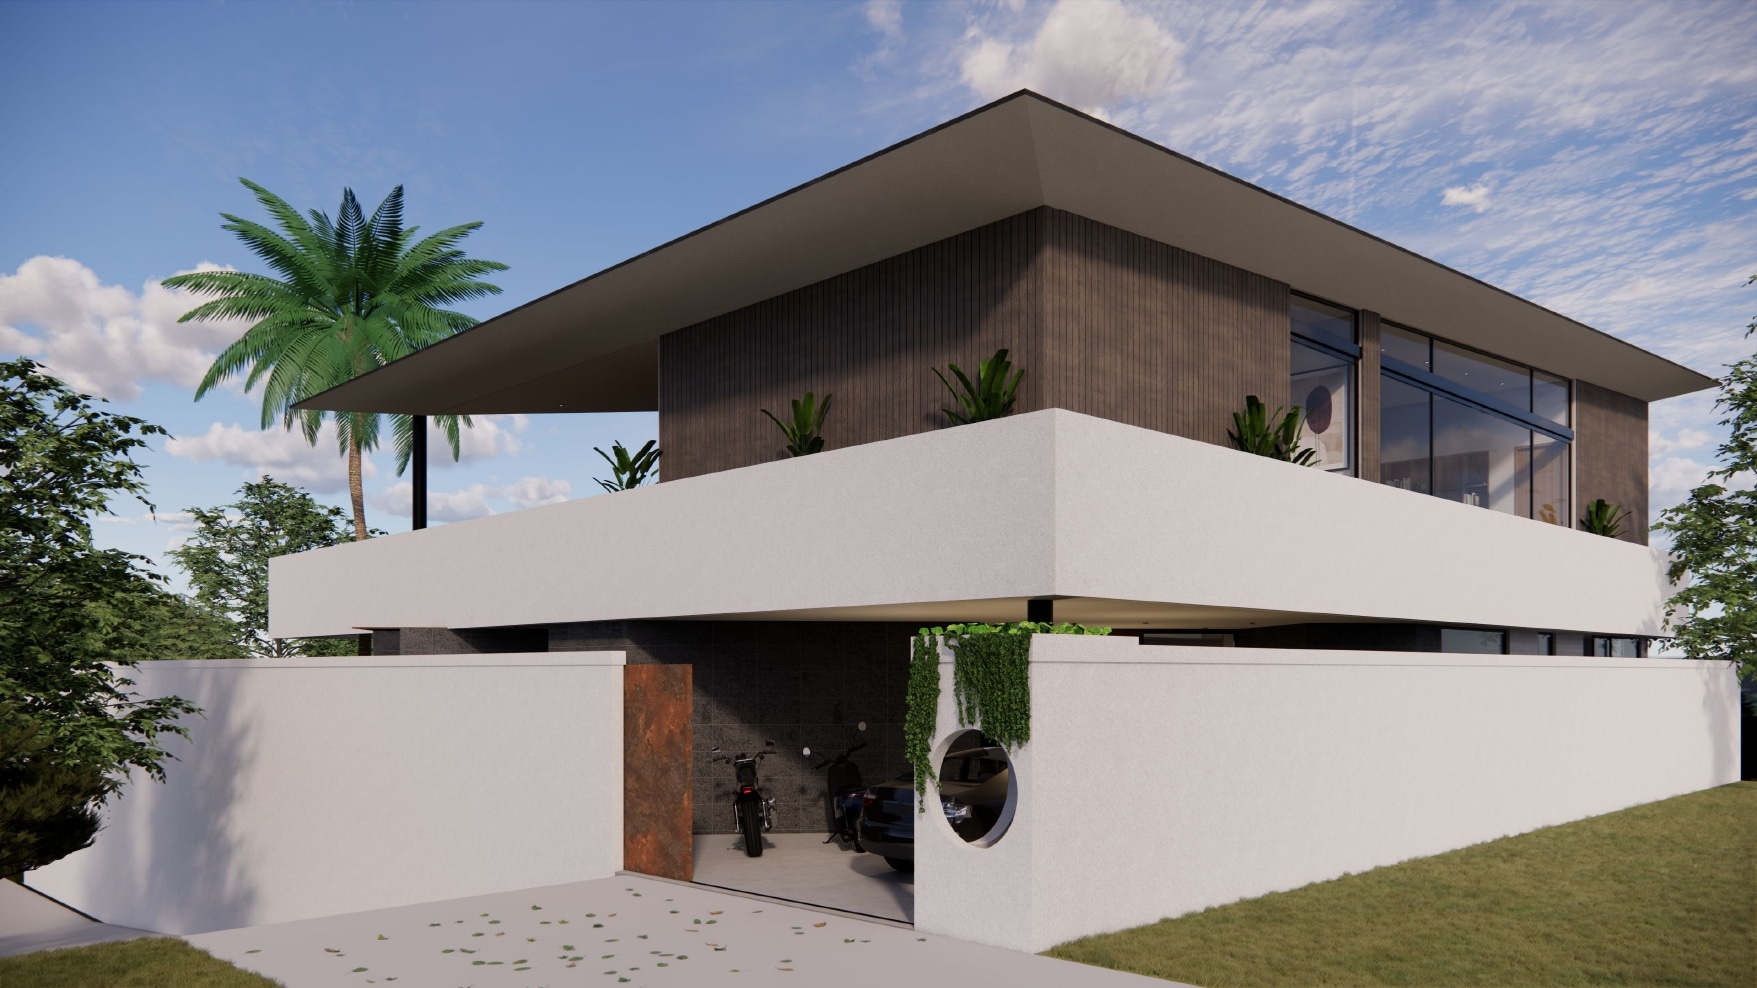 Design Assembly - Anyar 5 Villa - Bali Architect - Interior Design - Bali Villa - Parking Area - Outside Area - Gate - Wall Facade - Wooden